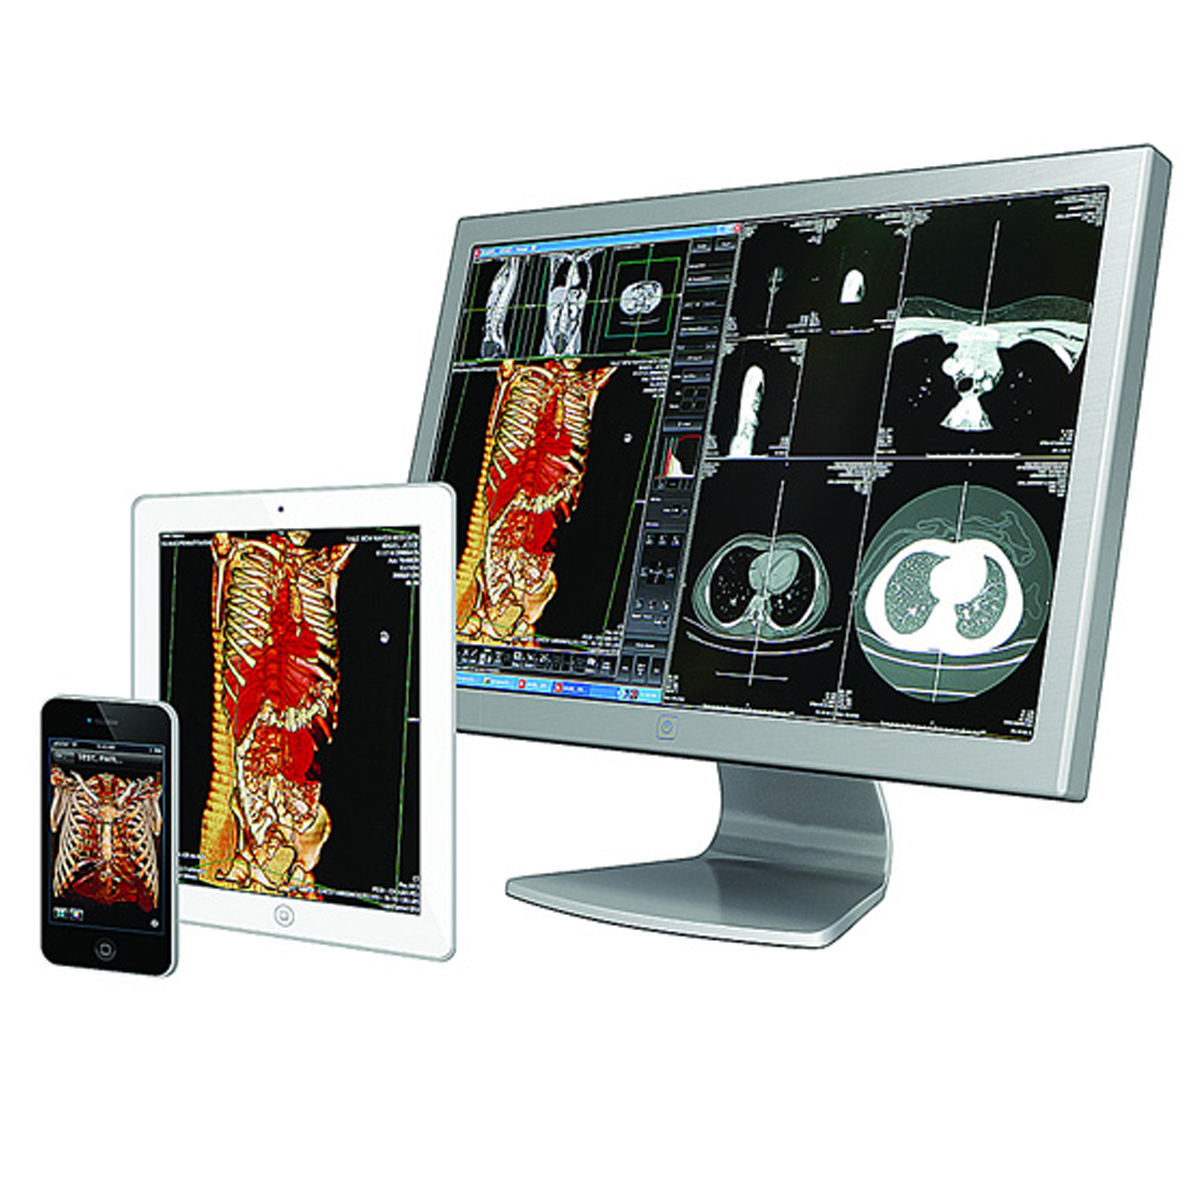 Synapse Mobile Image-Viewing Platform